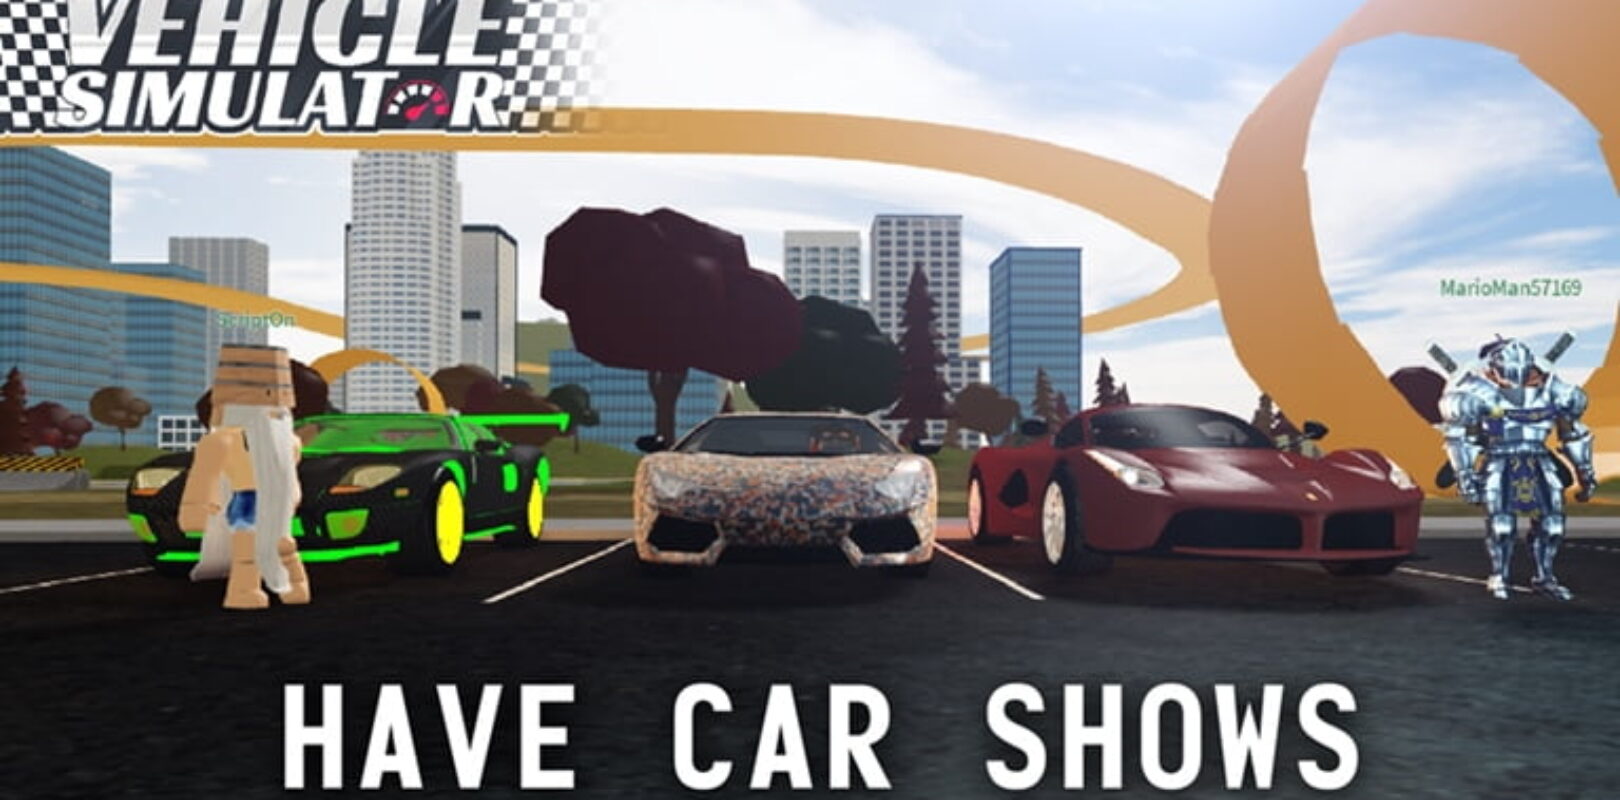 Vehicle Simulator Codes 2020 Pivotal Gamers - roblox vehicle simulator codes 2019 working